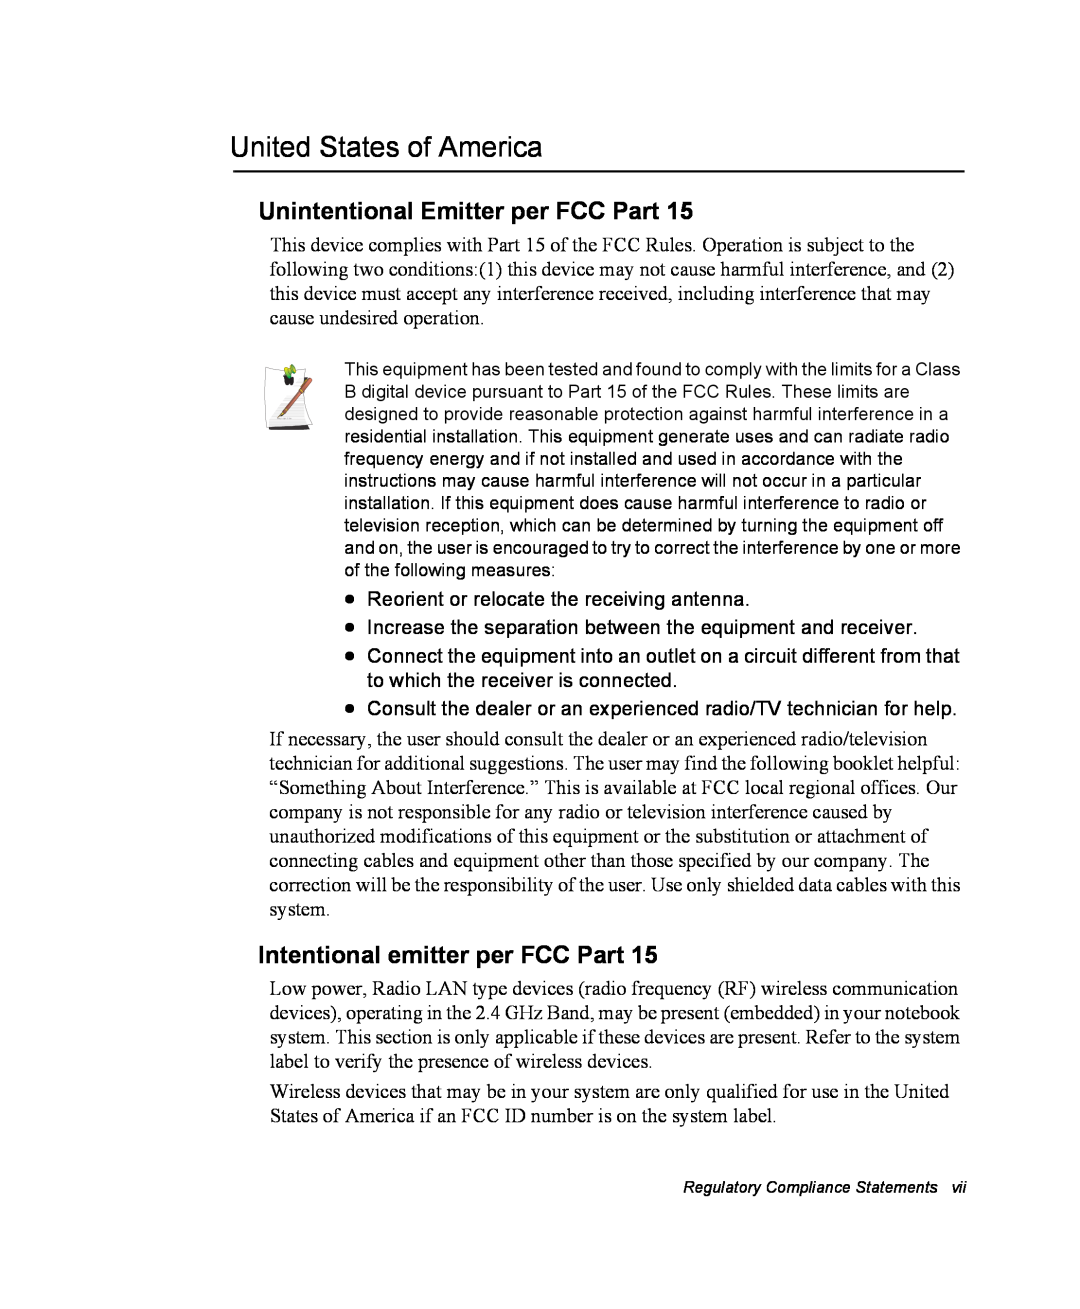 Samsung NM40TJ0MG9/SEF United States of America, Unintentional Emitter per FCC Part, Intentional emitter per FCC Part 